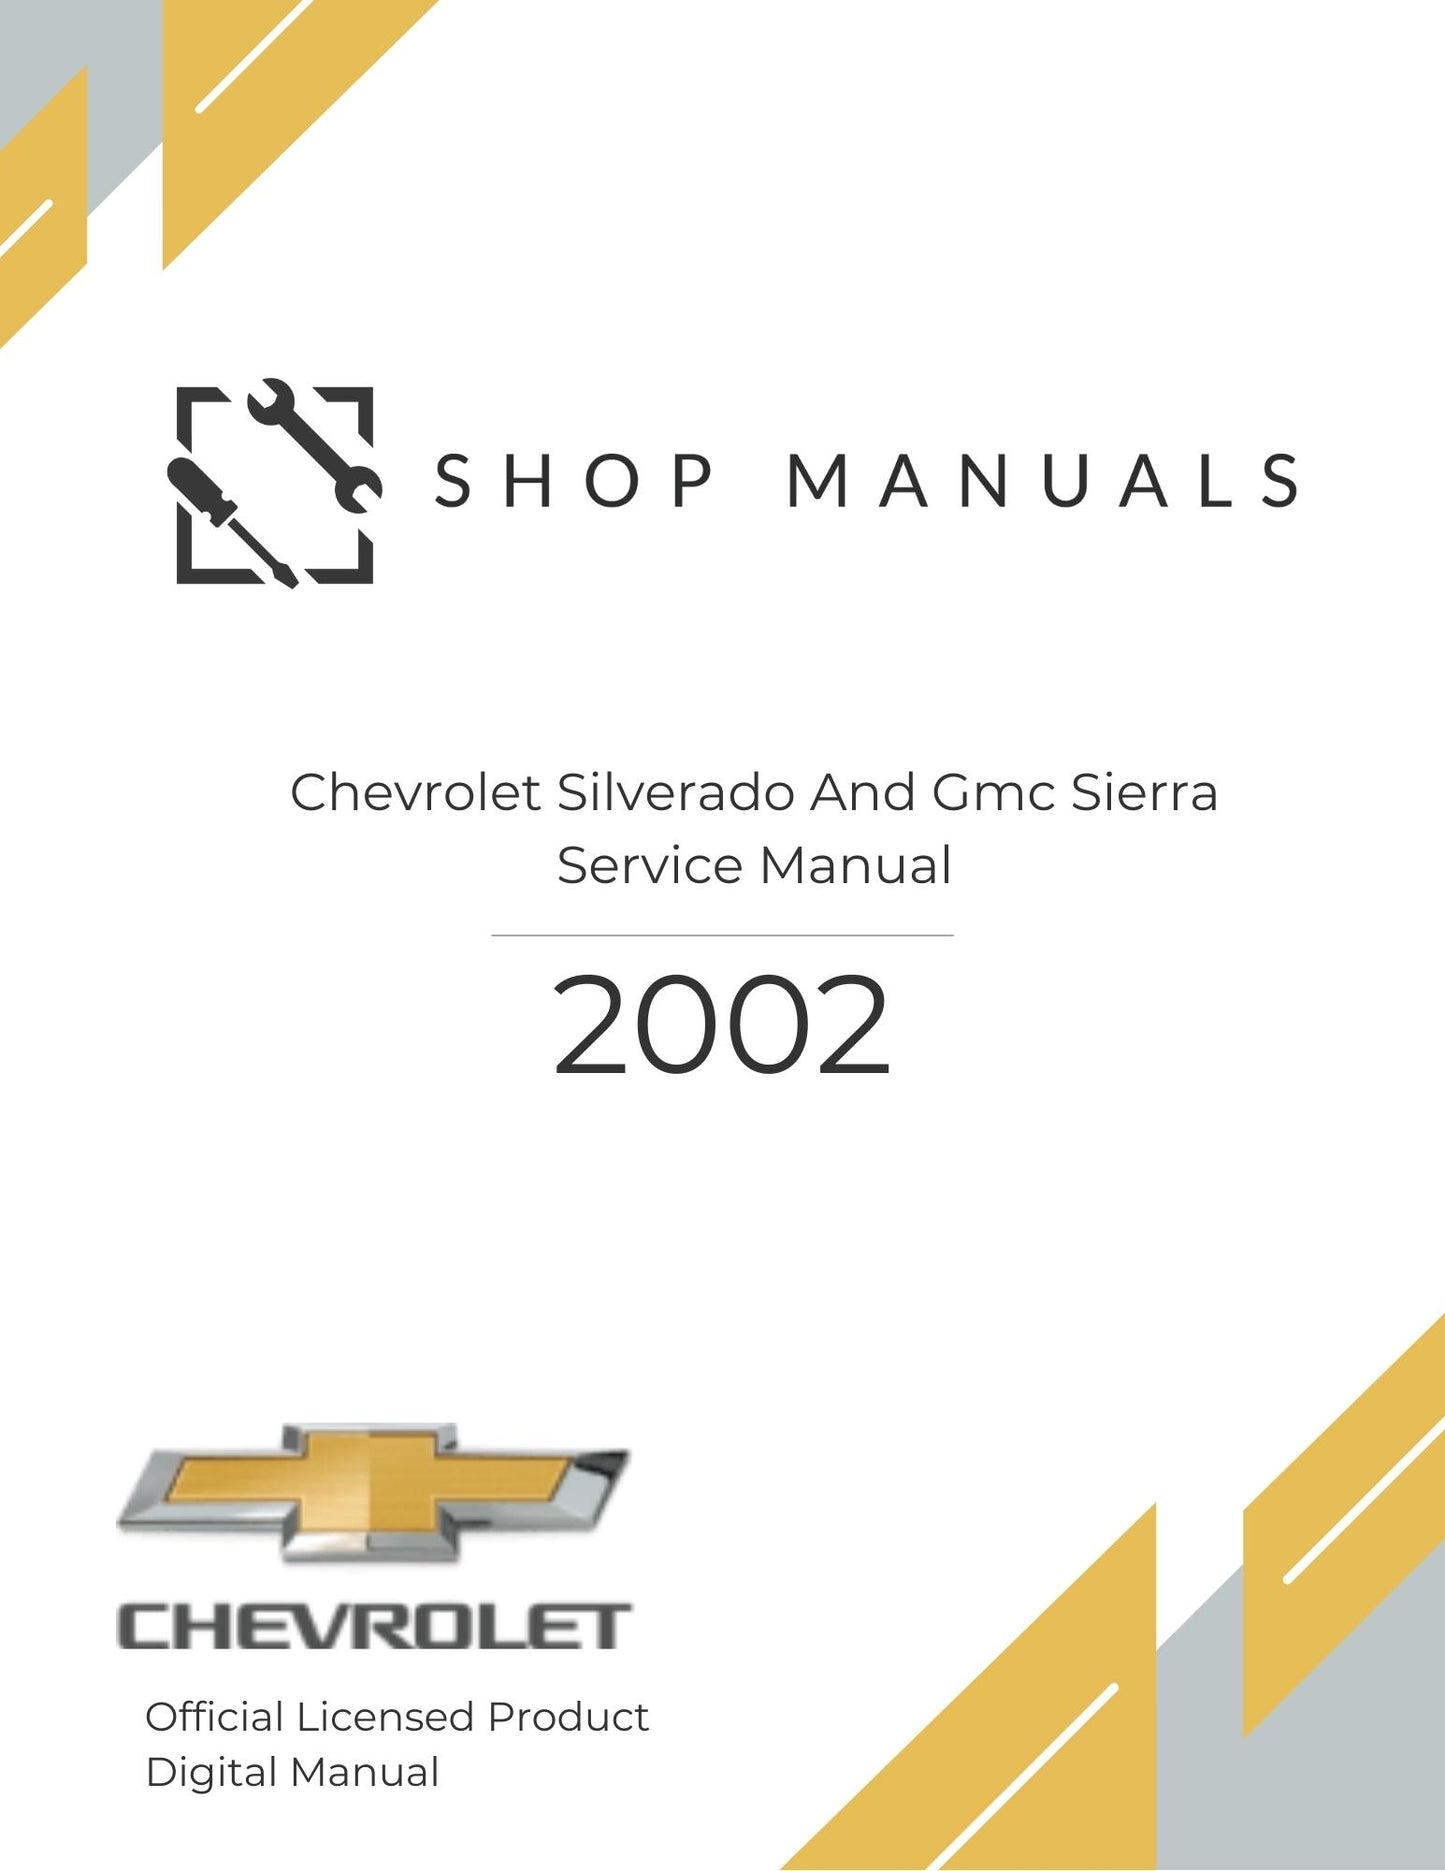 2002 Chevrolet Silverado and GMC Sierra Service Manual